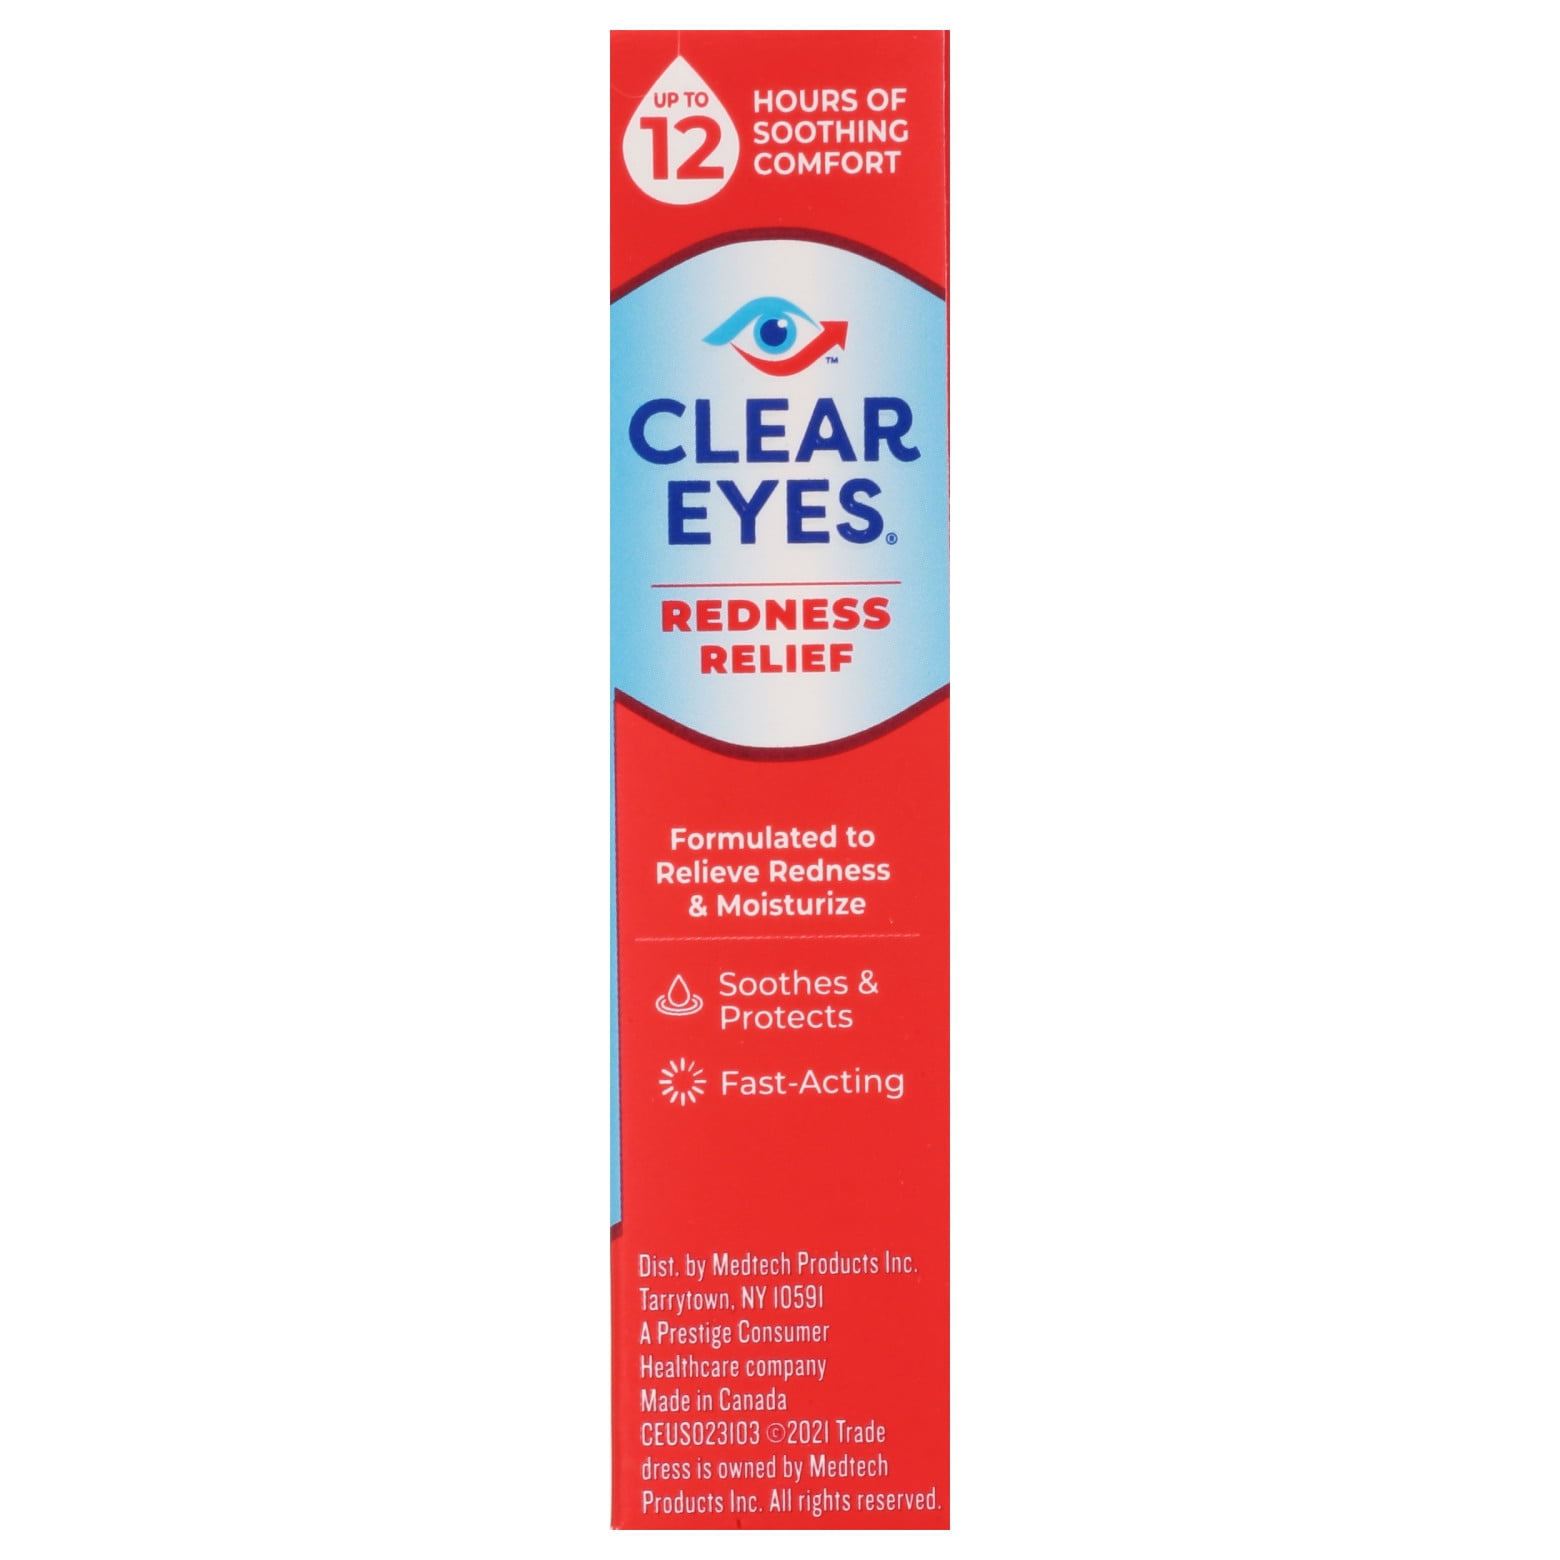 Clear Eyes Maximum Redness Relief Eye Drops - 0.5 fl oz bottle